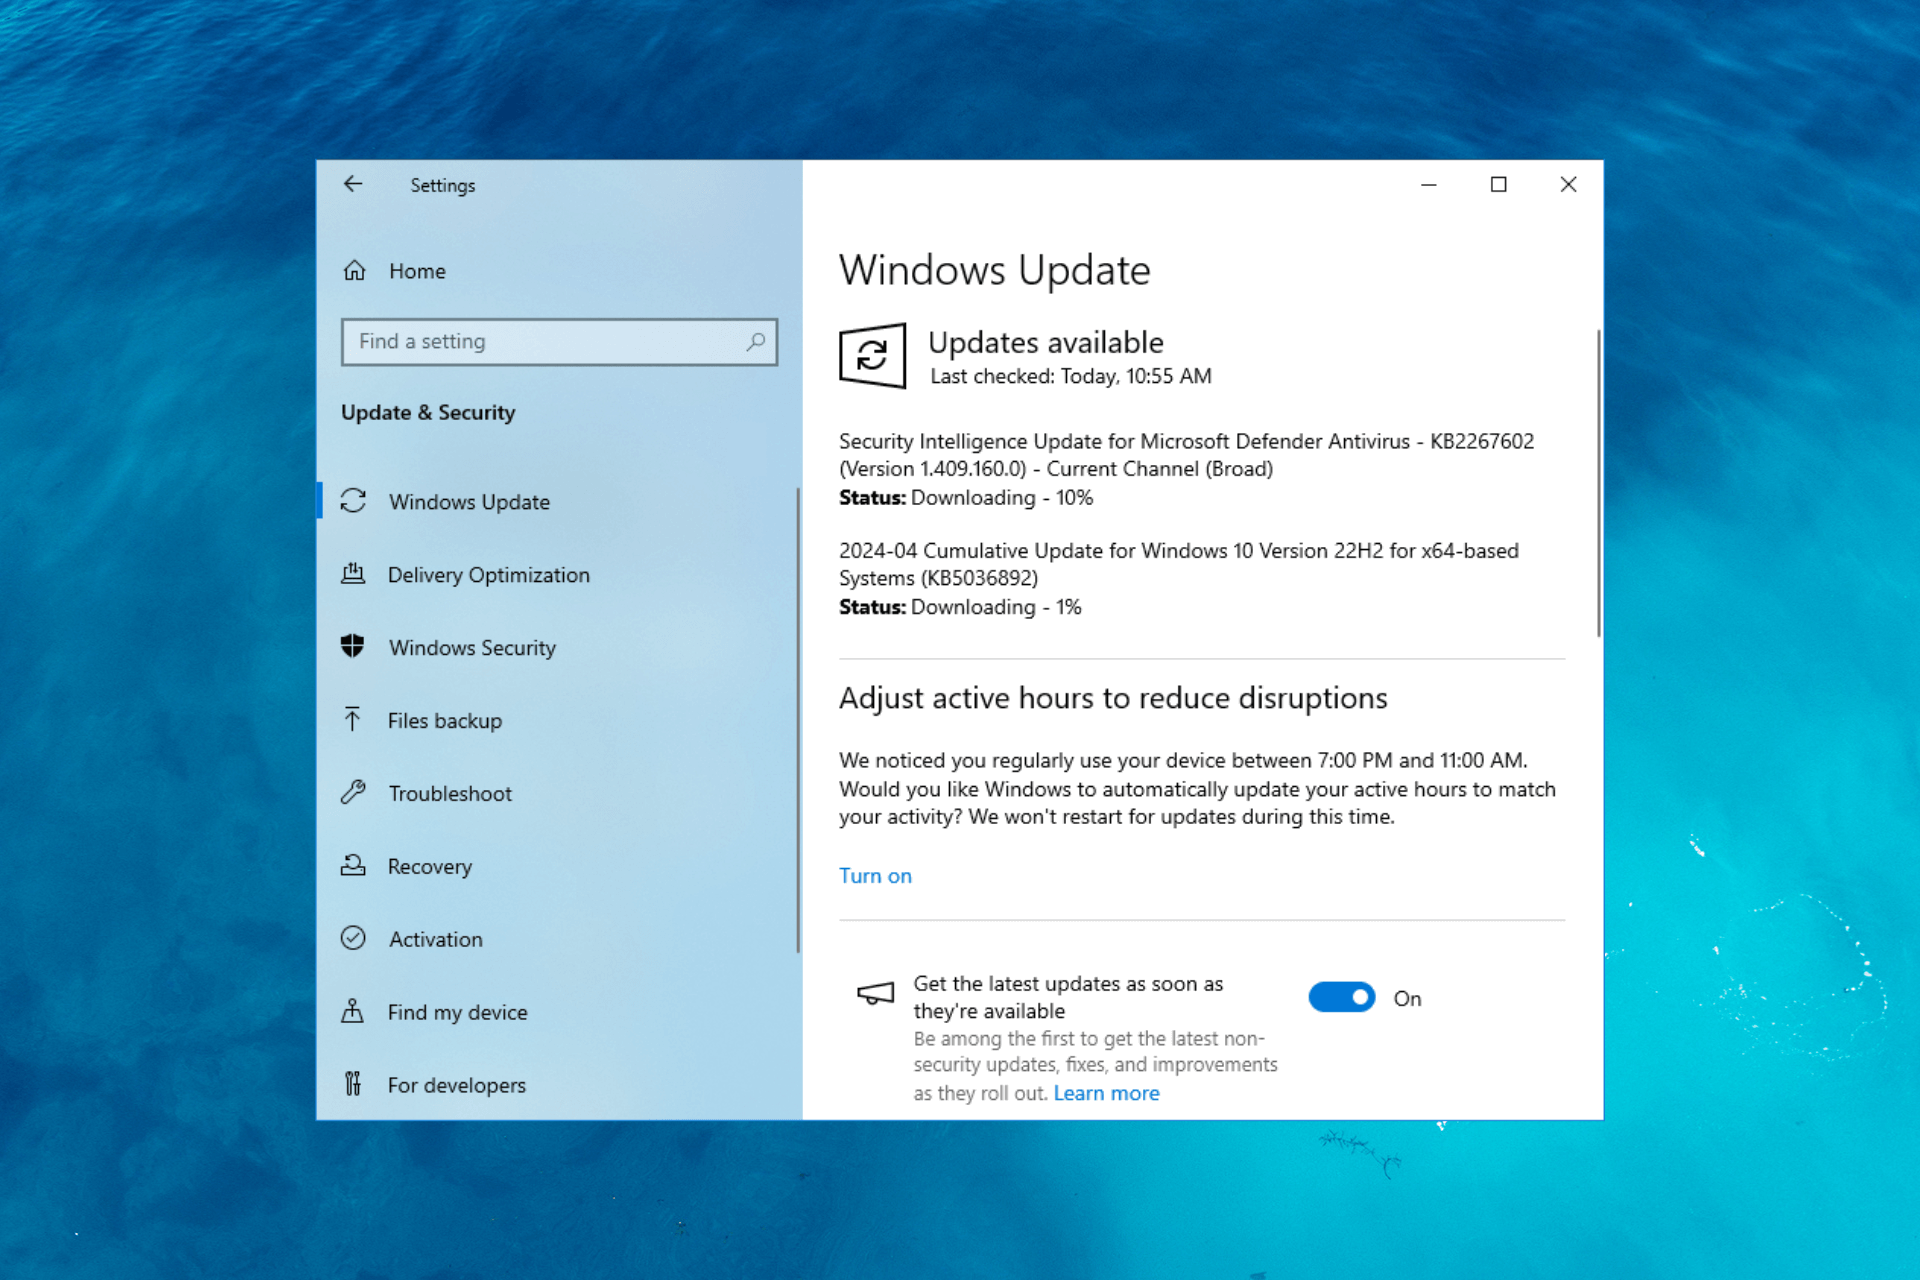 New Windows 10 Update brings Bing Spotlight integration on desktop & MSN cards on lock screen